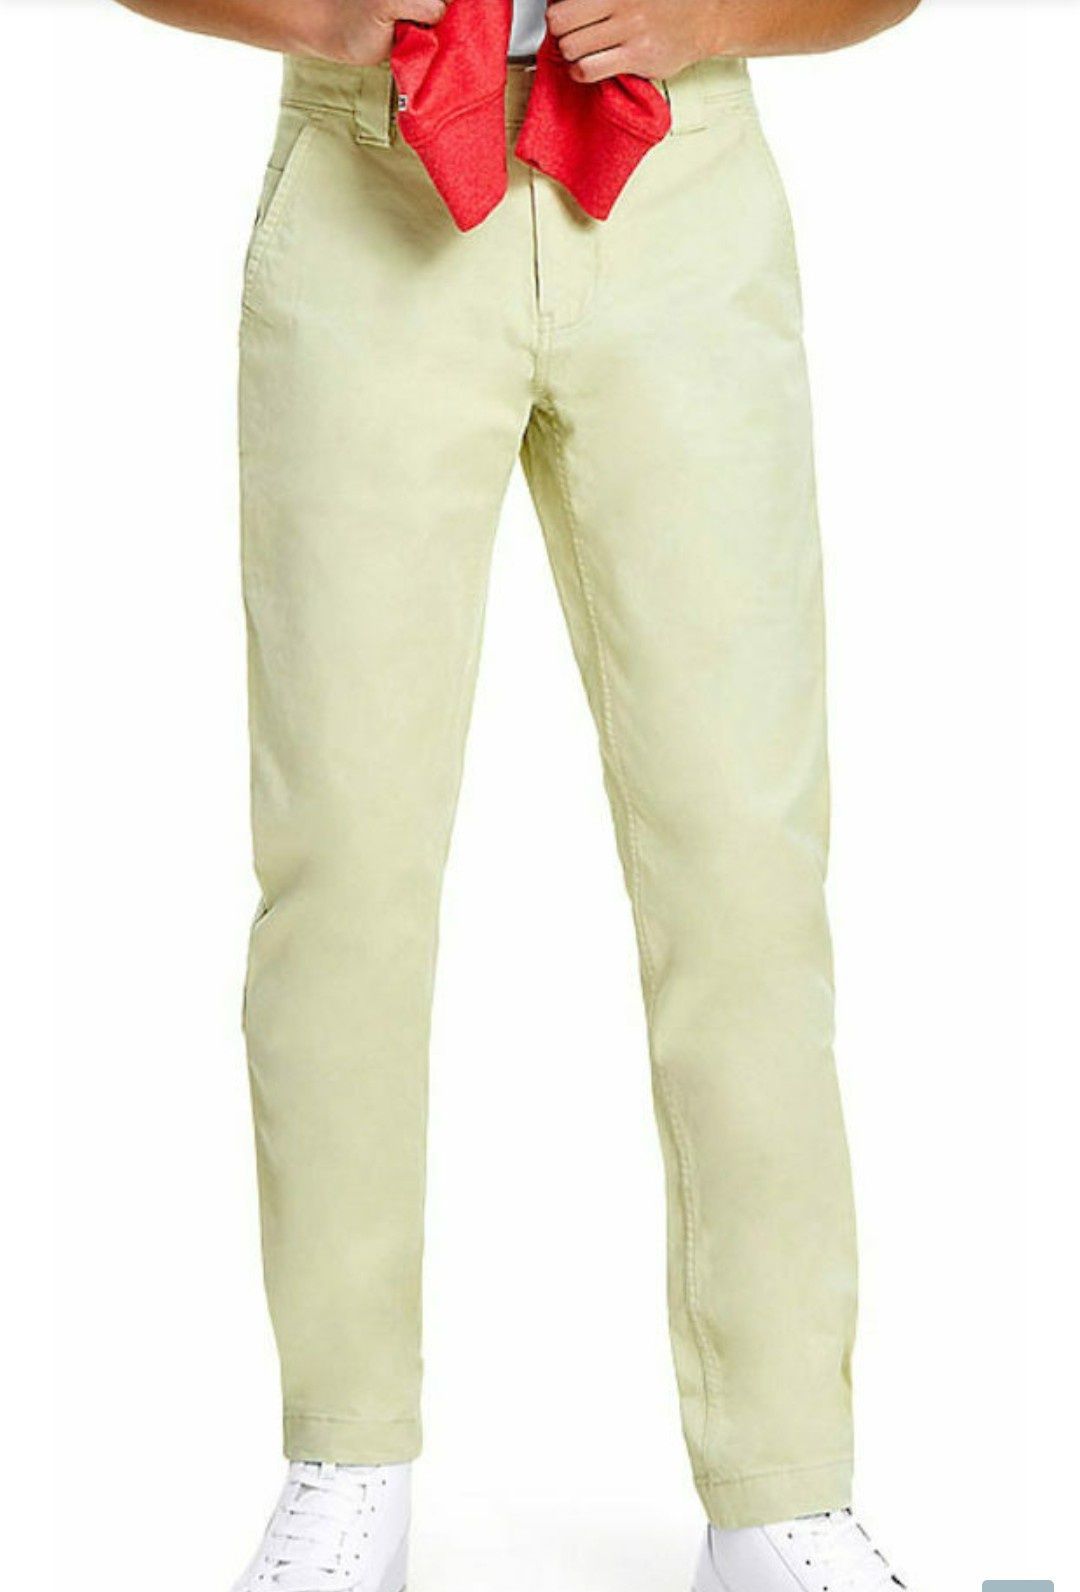 Nowe Tommy Jeans 32/32 Chino Bay Laurel  Tjm Scanton chino spodnie